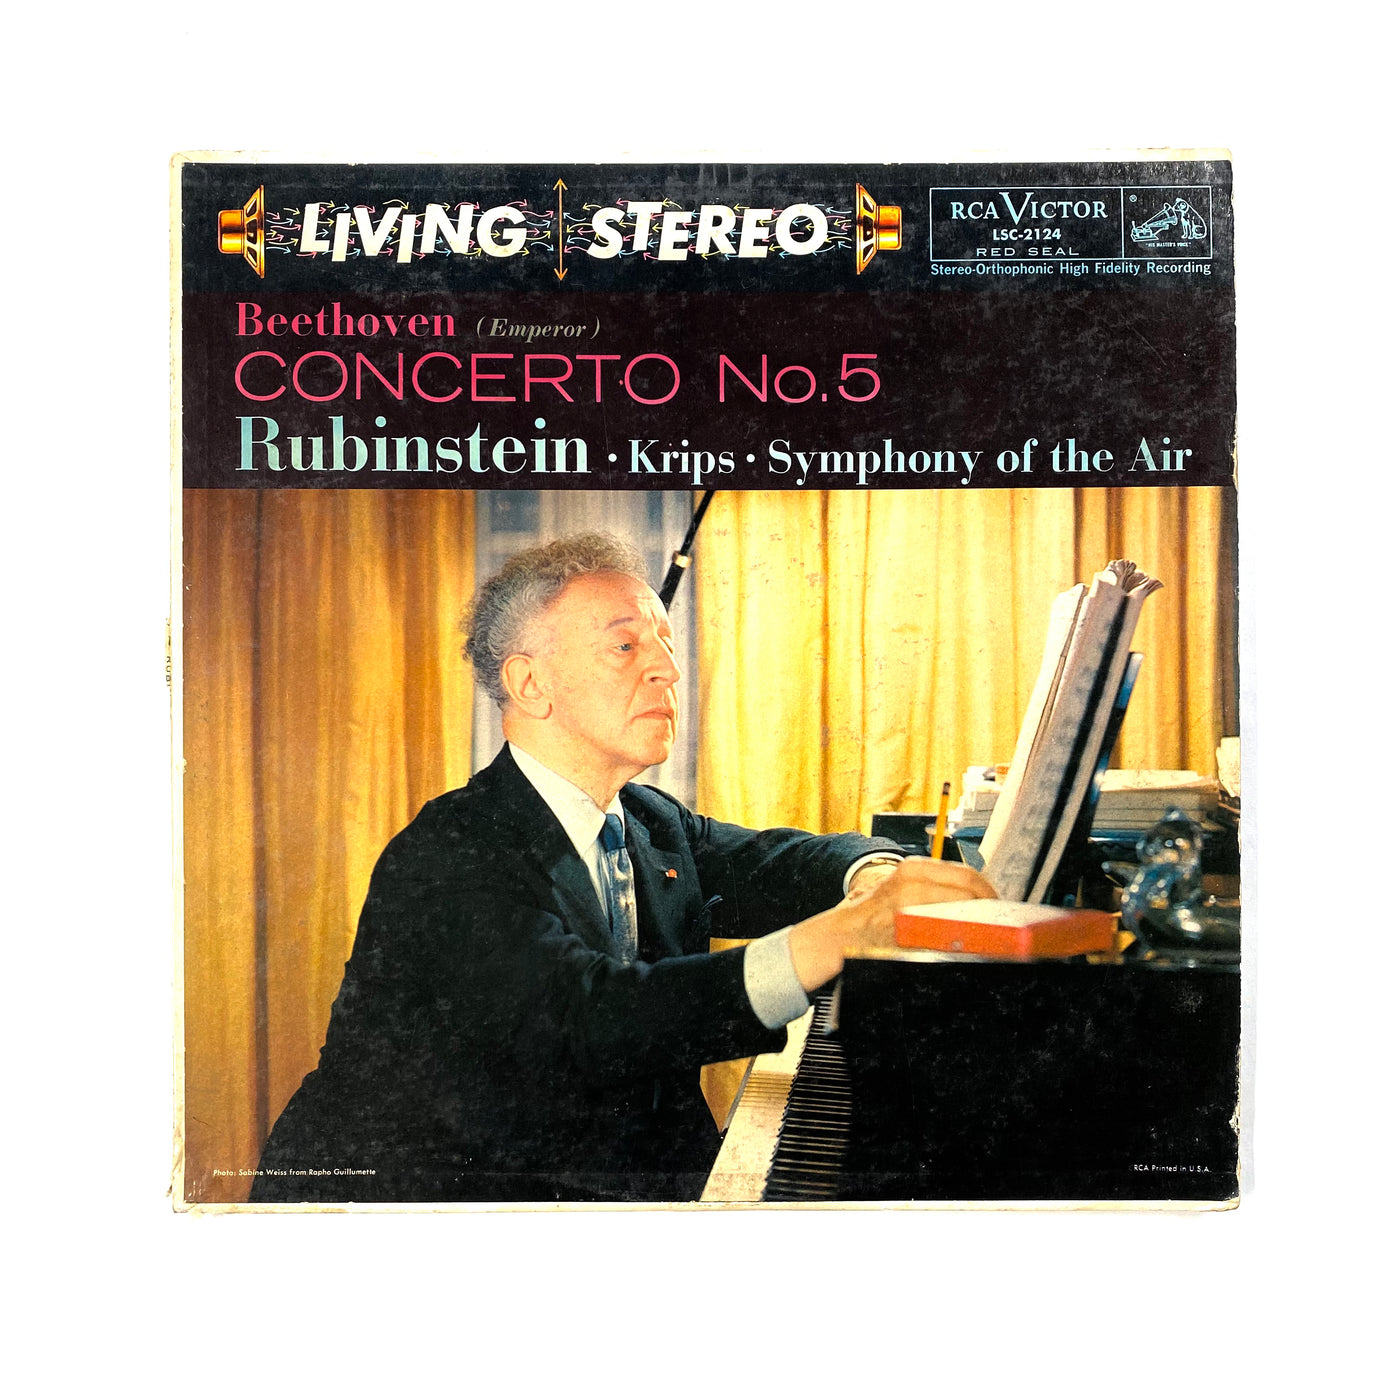 Ludwig Van Beethoven, Arthur Rubinstein, Josef Krips, Symphony Of The Air - Concerto No. 5, In E-Flat, Op. 73 ("Emperor")